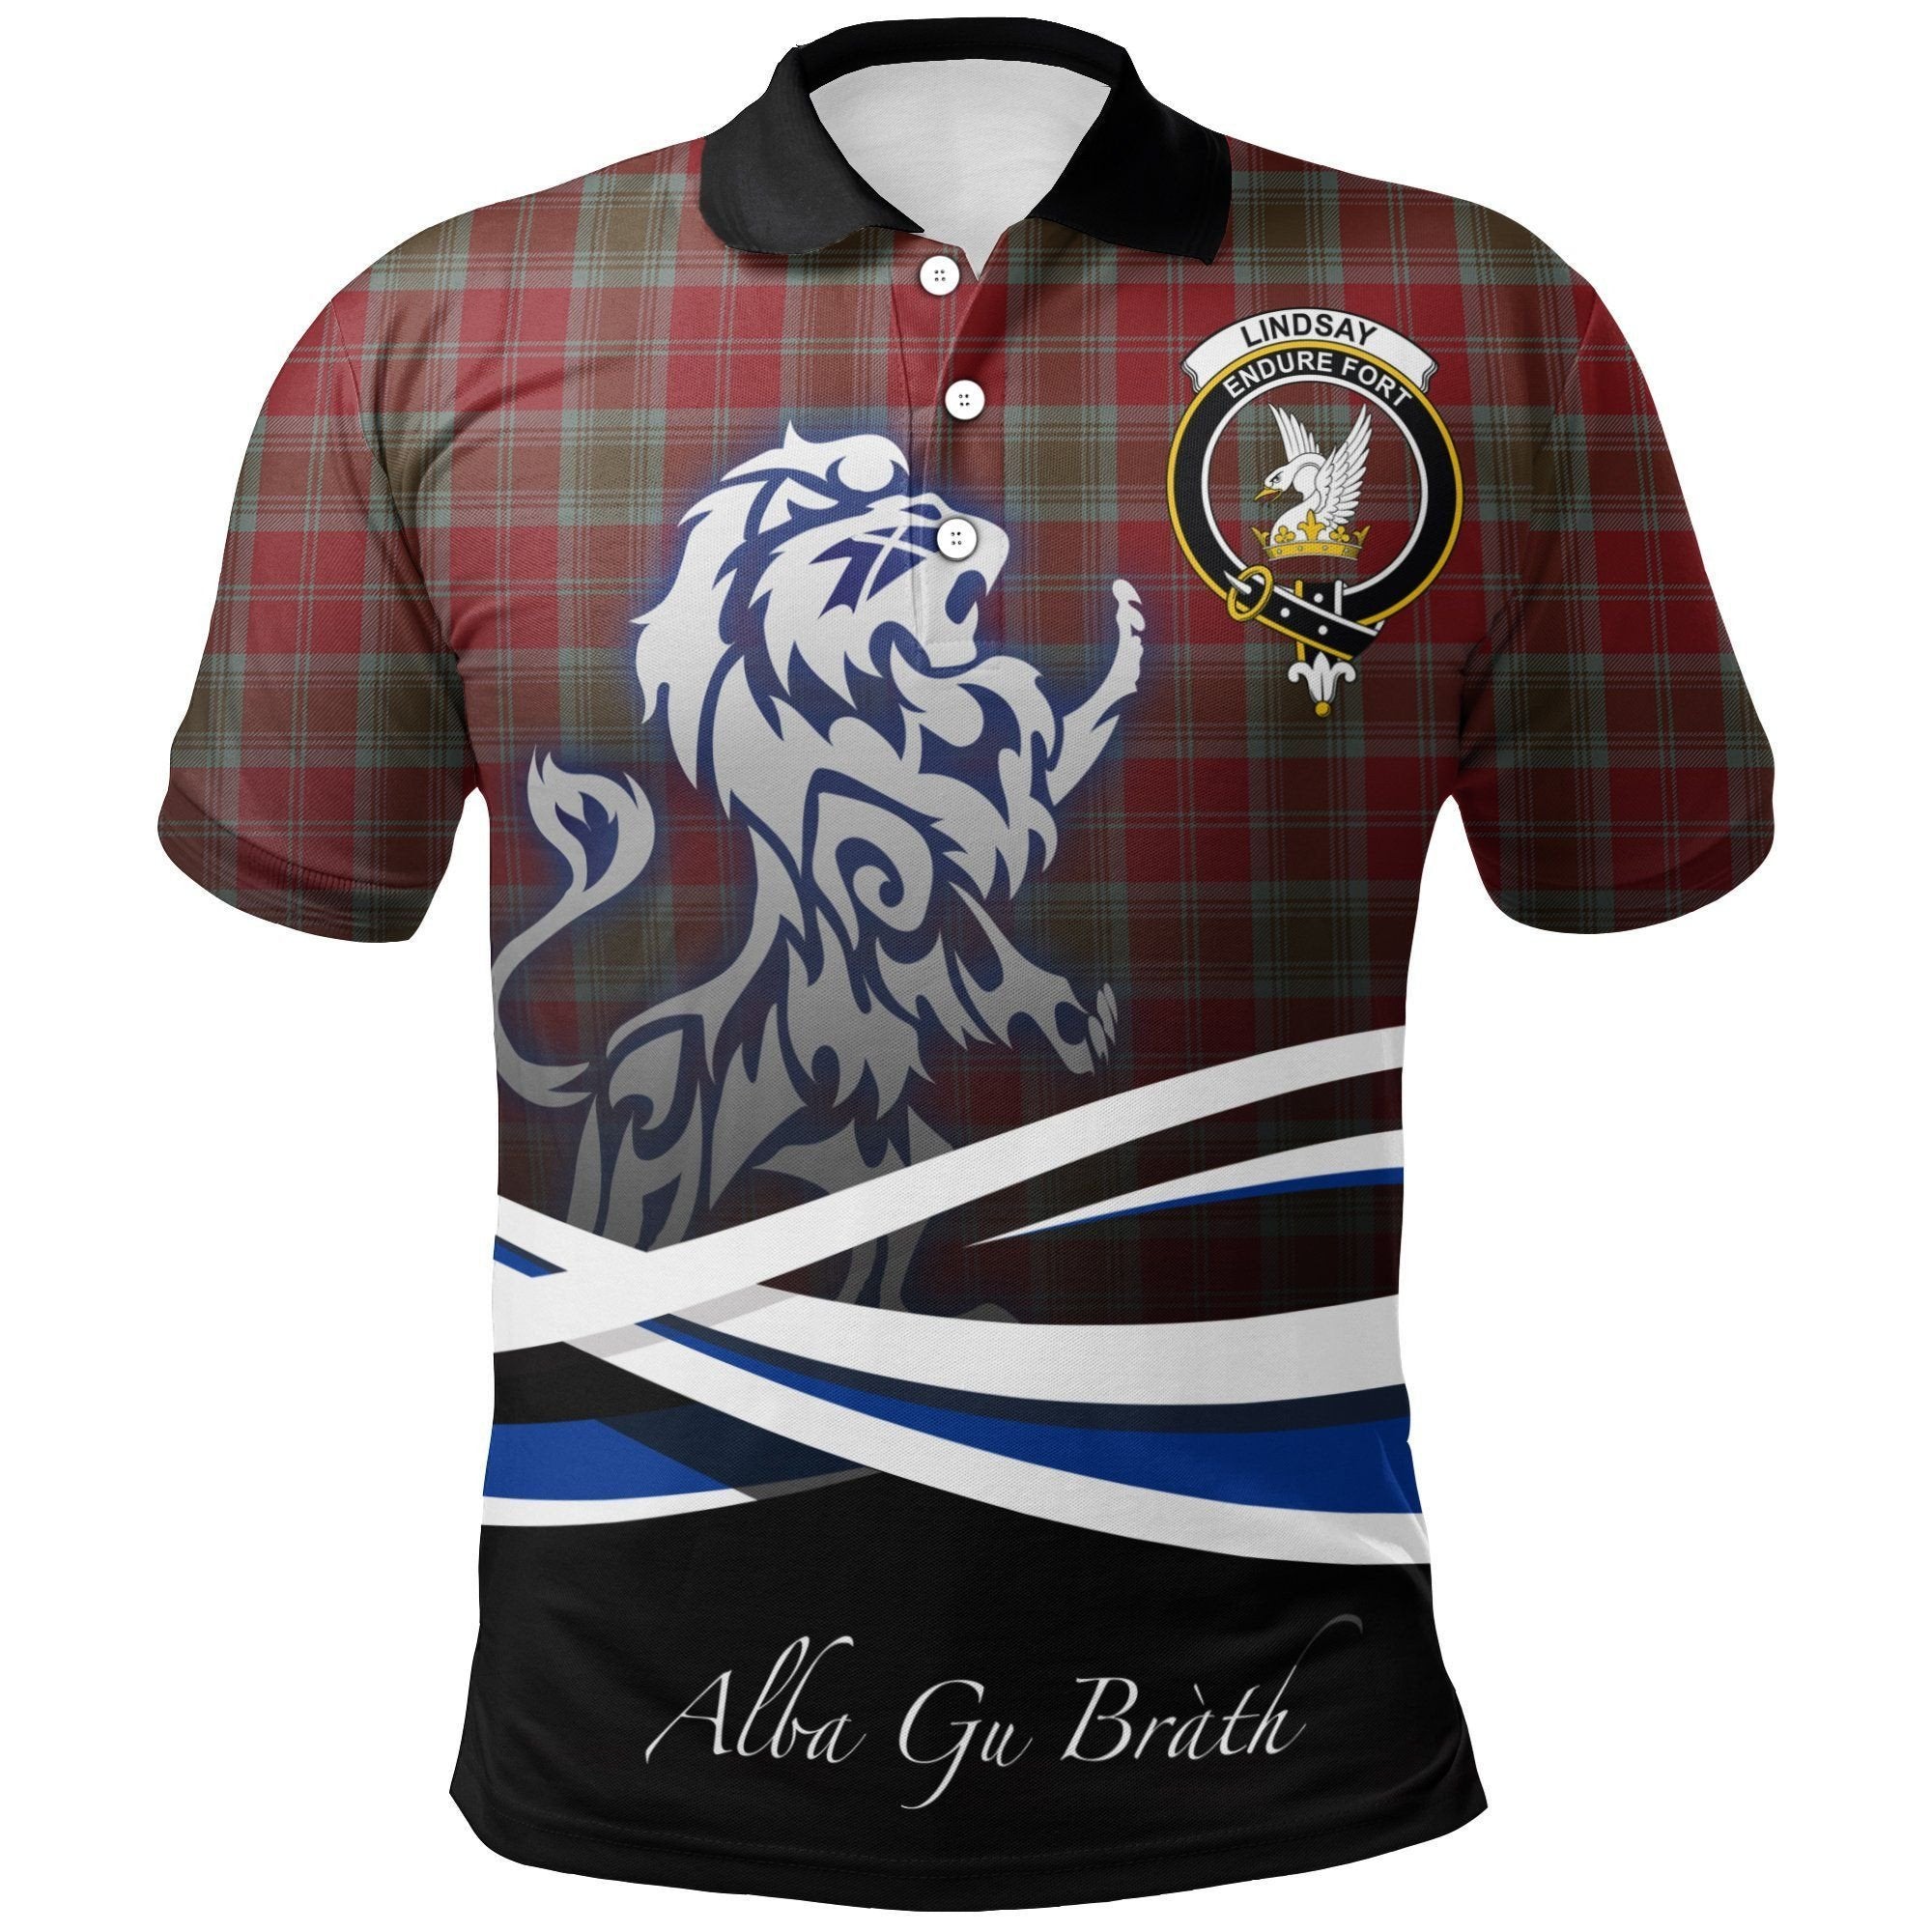 Lindsay Weathered Clan Polo Shirt, Scottish Tartan Lindsay Weathered Clans Polo Shirt Crest Lion Style